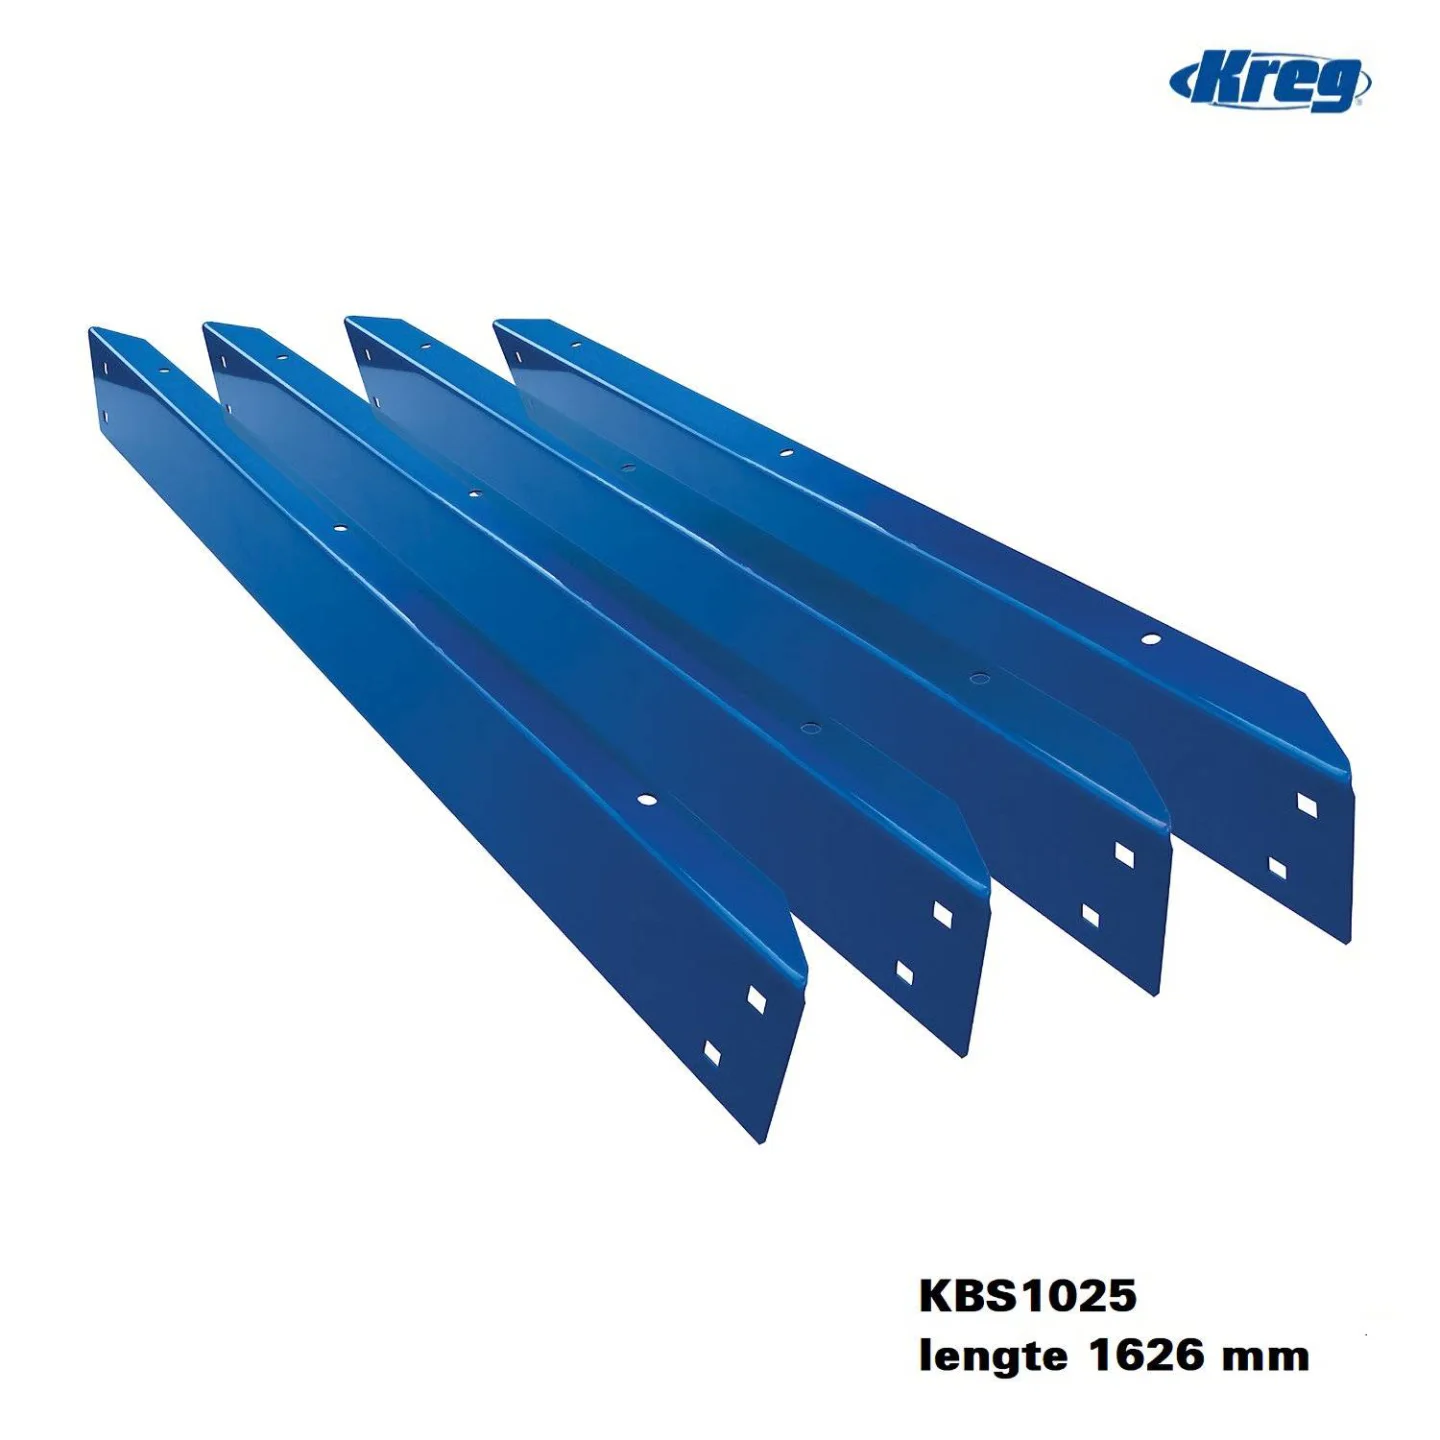 werkbank-rails-Kreg-KBS1025-1626mm.